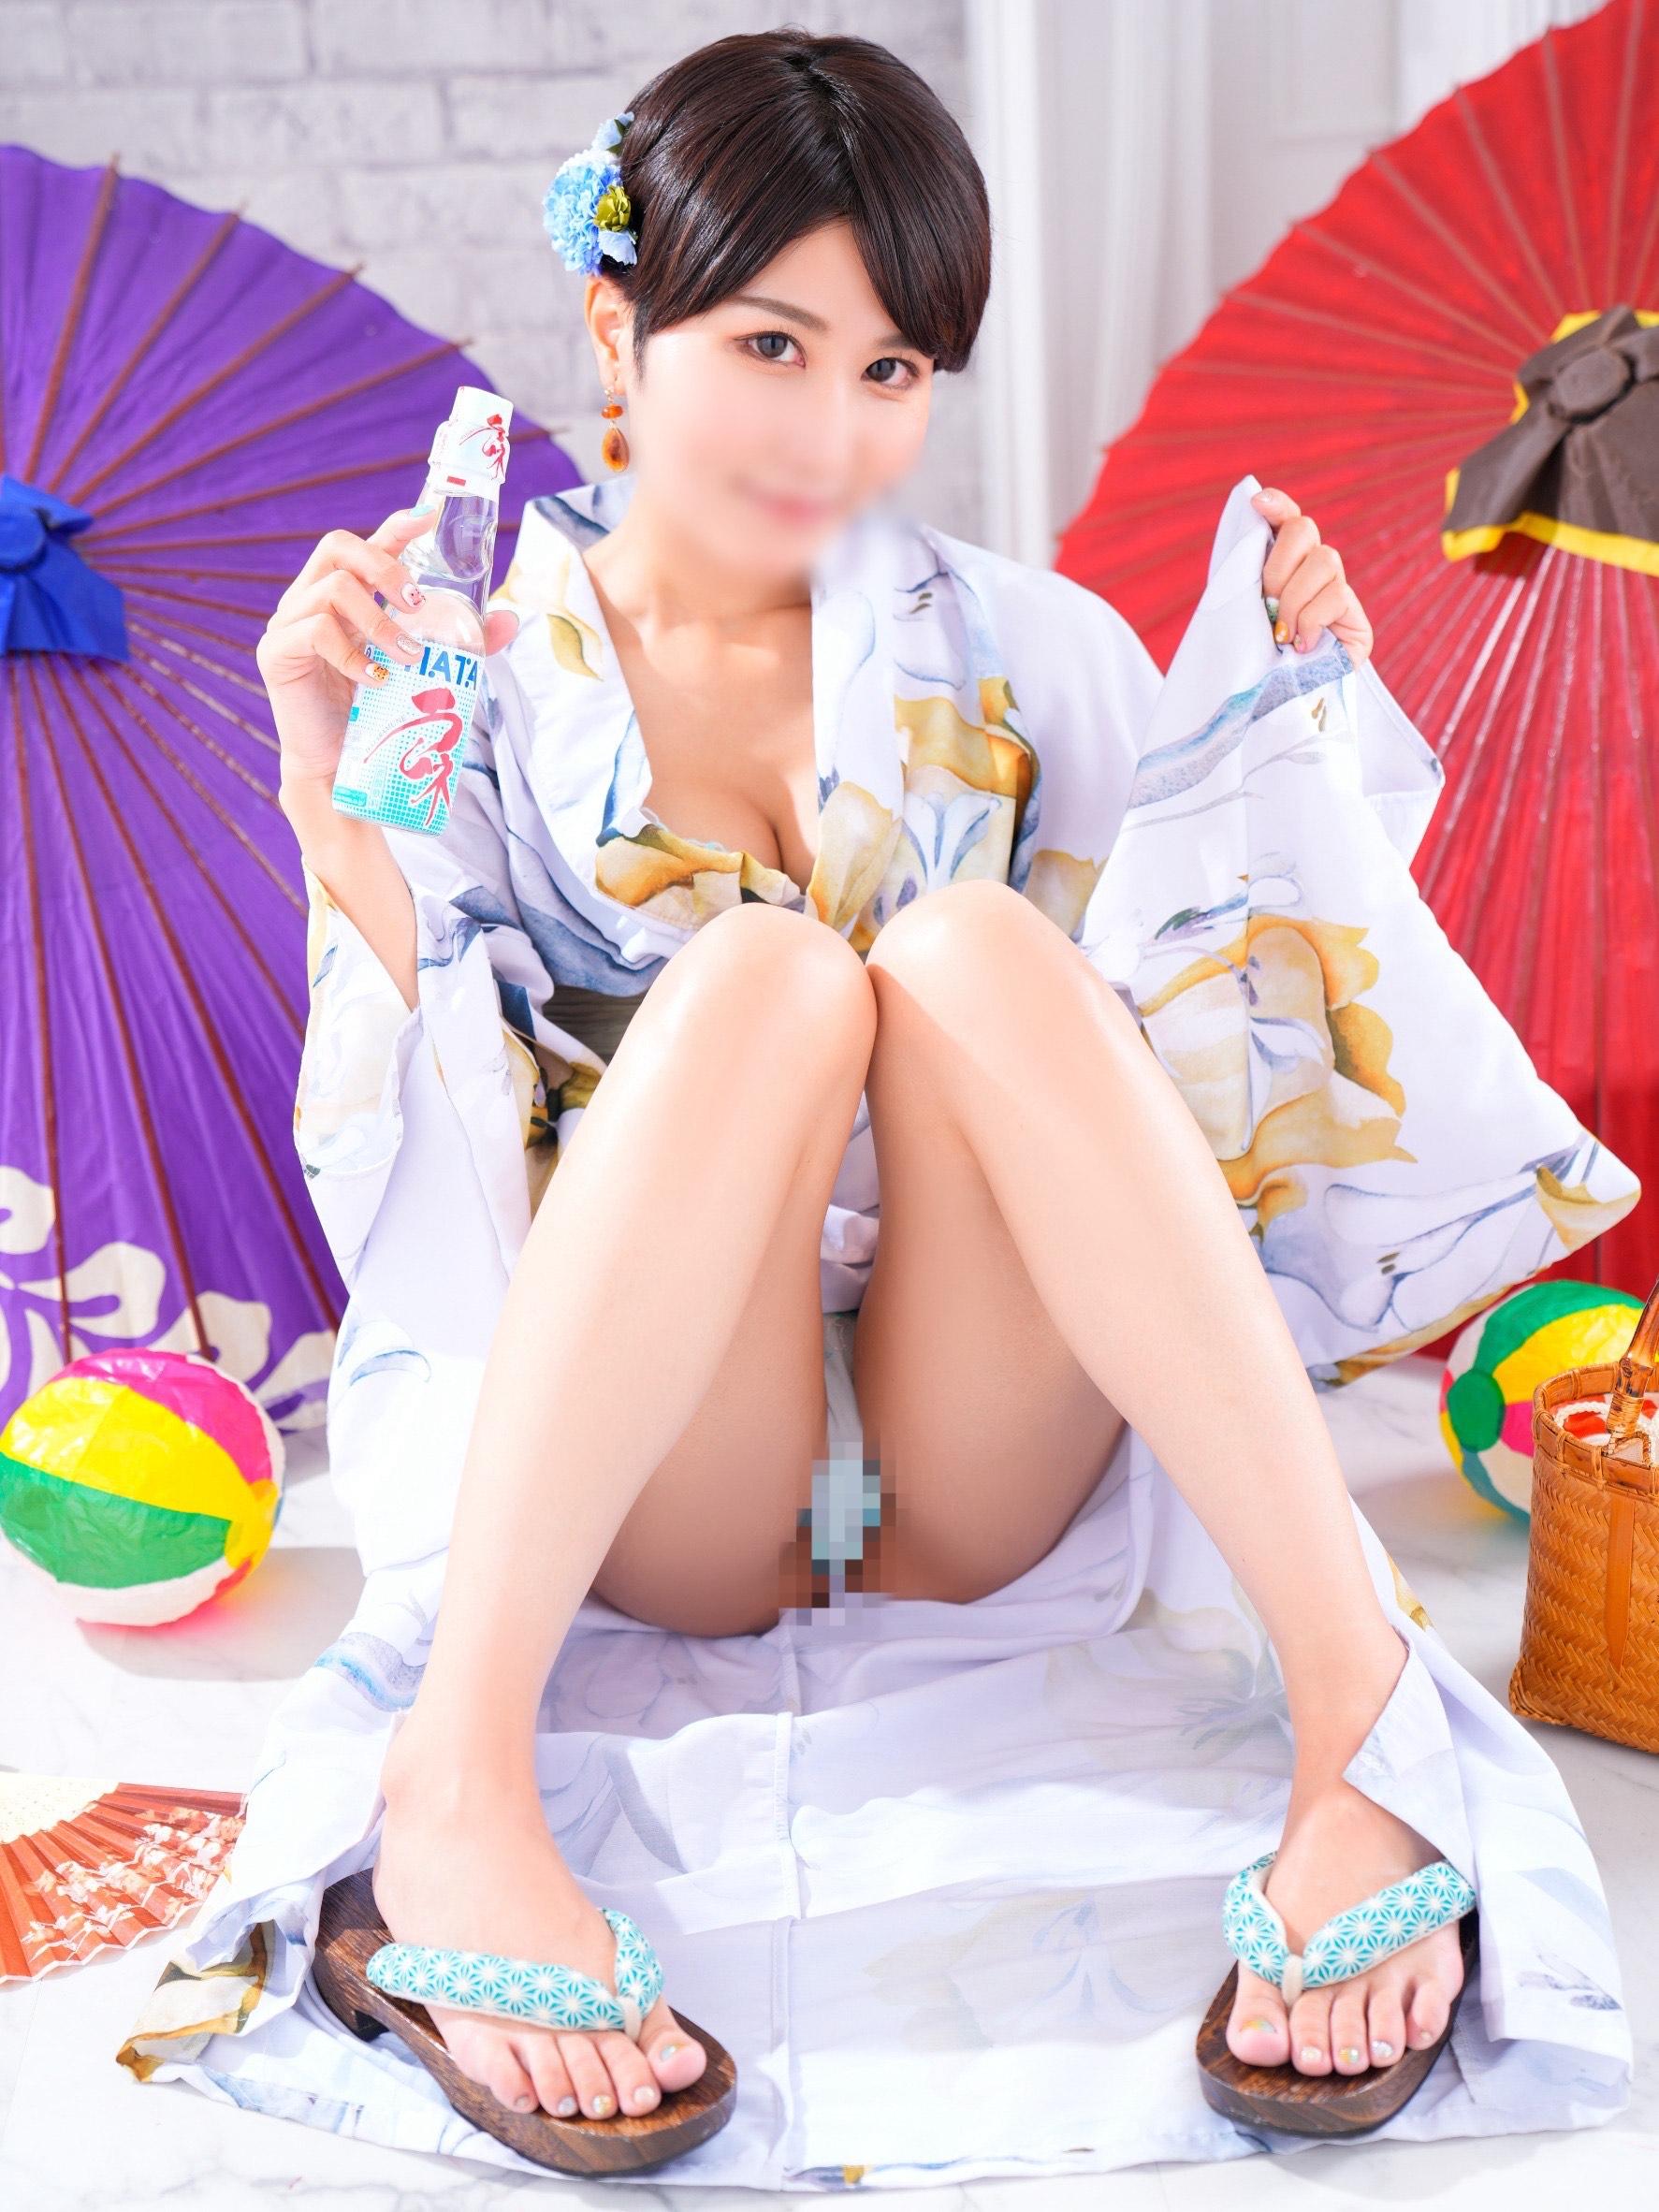 【<img class="emojione" alt="👘" title=":kimono:" src="https://fuzoku.jp/assets/img/emojione/1f458.png"/>27日(土)<img class="emojione" alt="🌈" title=":rainbow:" src="https://fuzoku.jp/assets/img/emojione/1f308.png"/>未来限定浴衣イベント<img class="emojione" alt="👘" title=":kimono:" src="https://fuzoku.jp/assets/img/emojione/1f458.png"/> 】